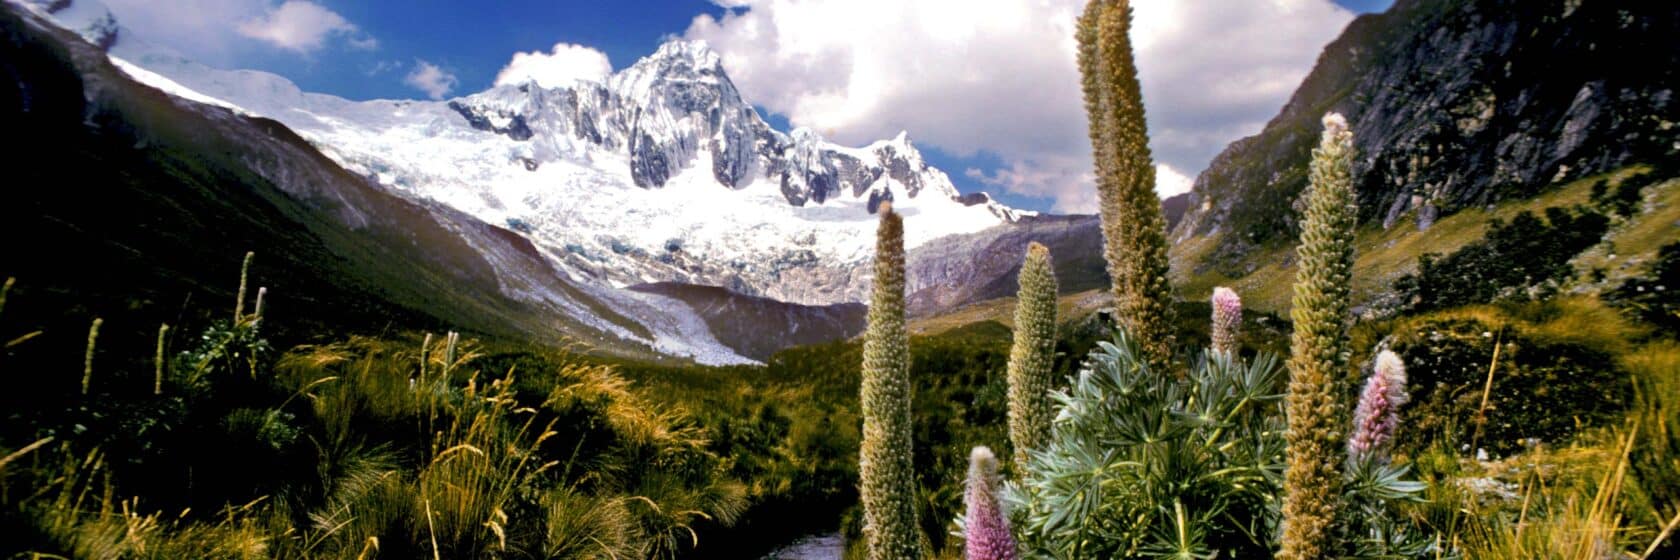 Snow peaked mountains in Peru.